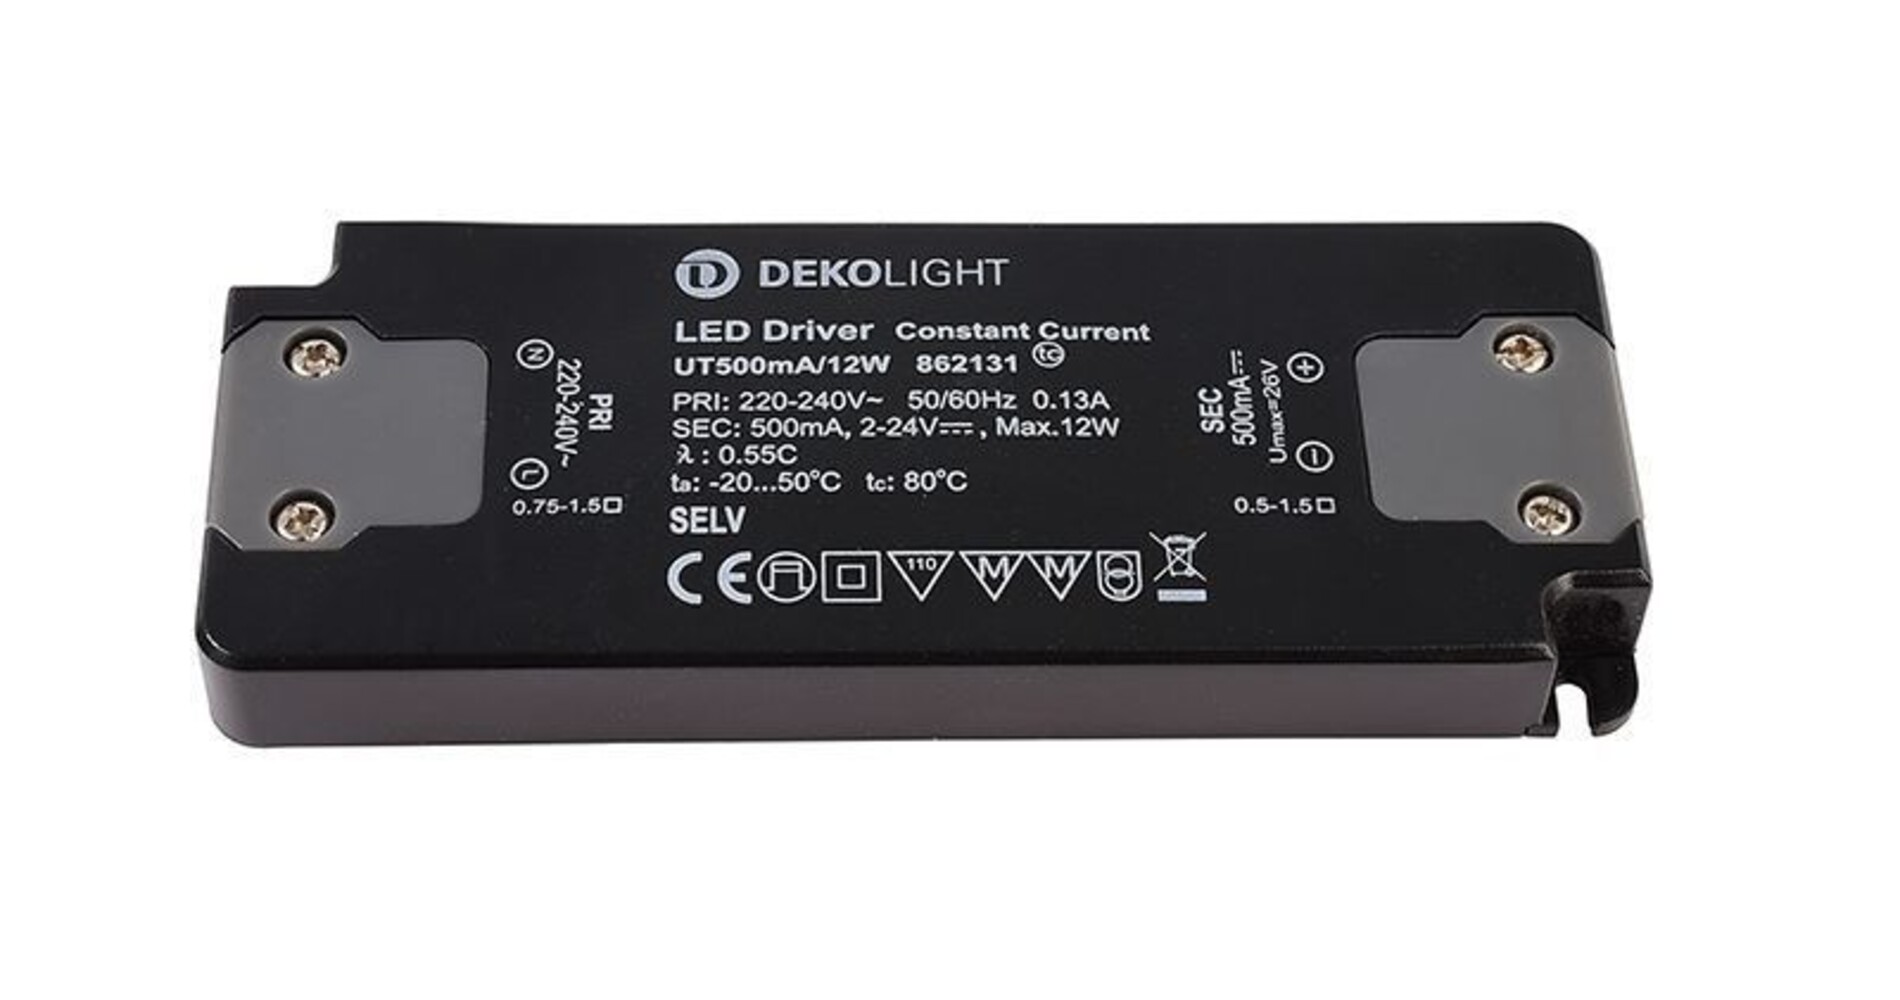 Hochwertiges, stromkonstantes LED Netzteil der Marke Deko-Light